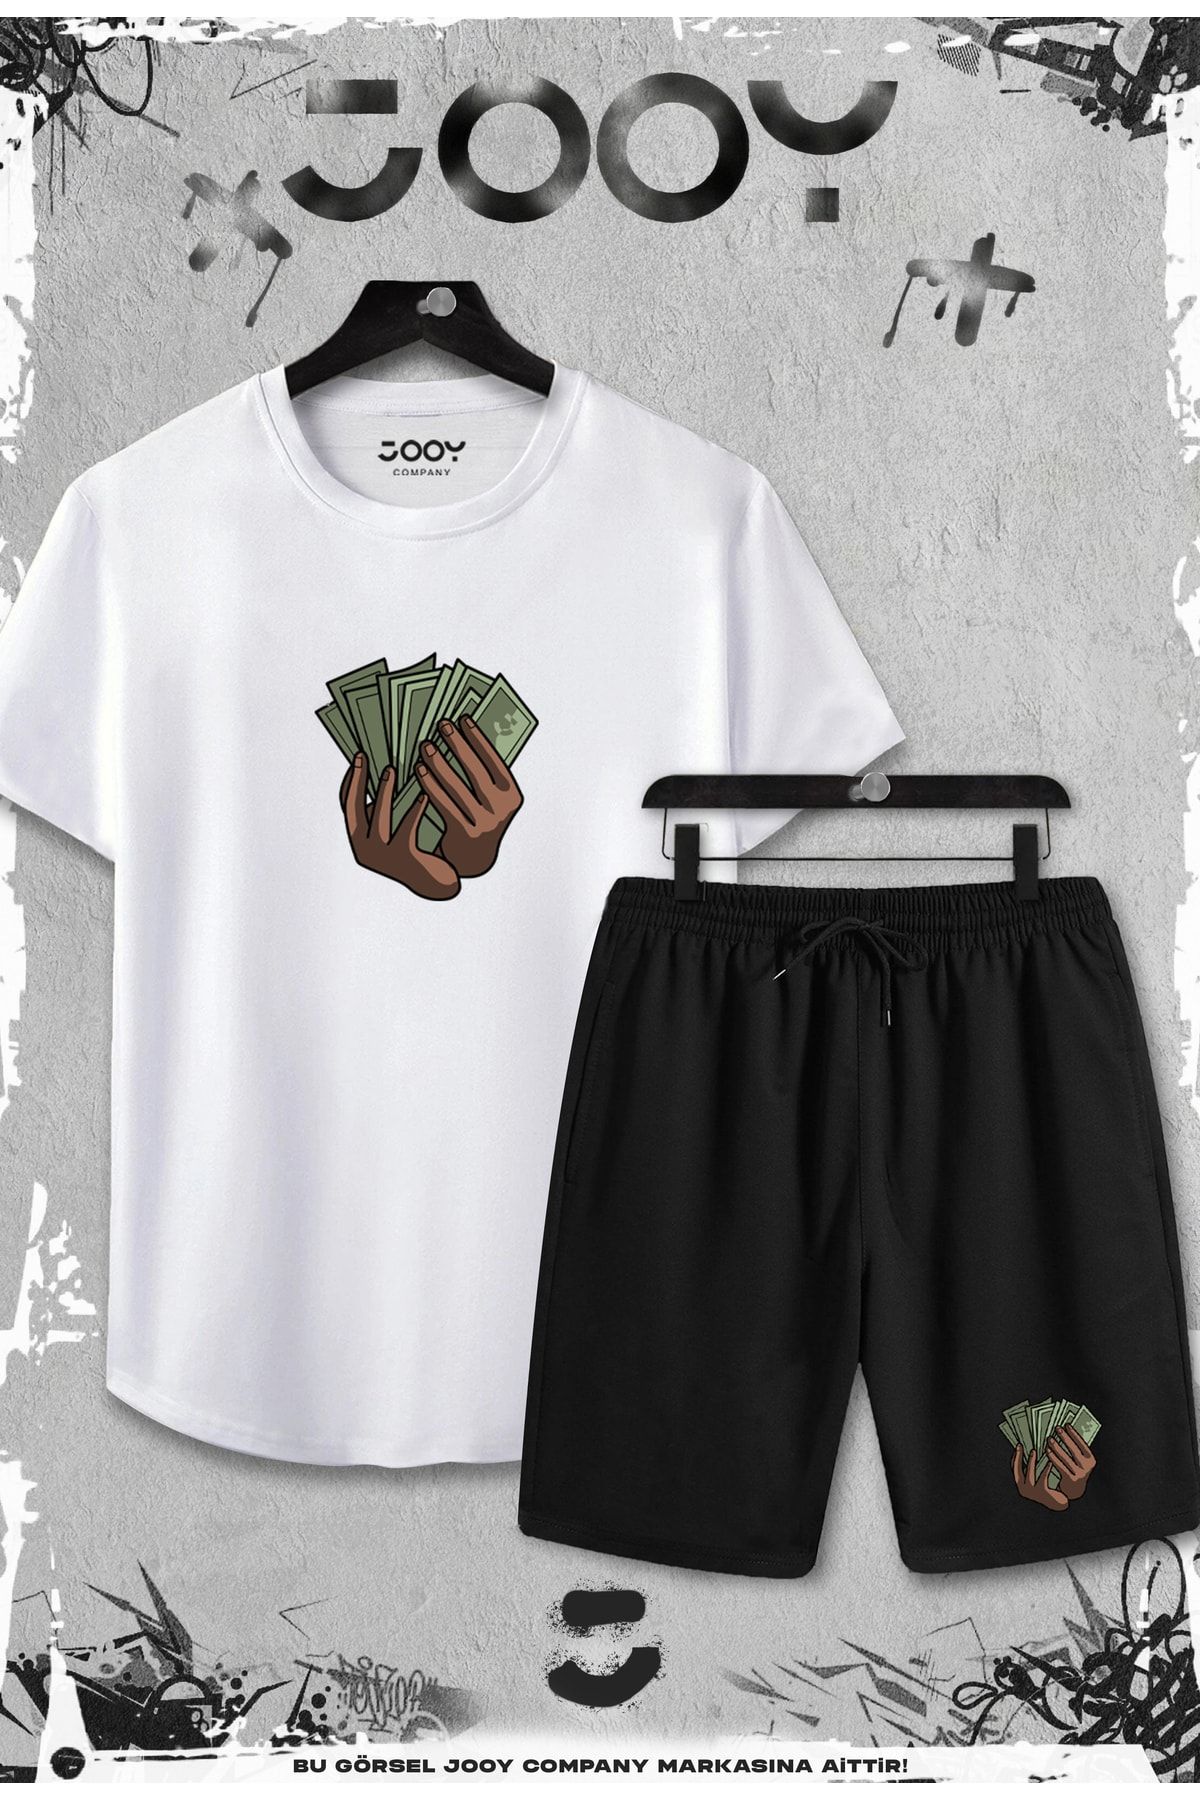 Jooy Company 2'li Para Tasarım Slim Fit Beyaz Tshirt - Siyah Şortlu Takım